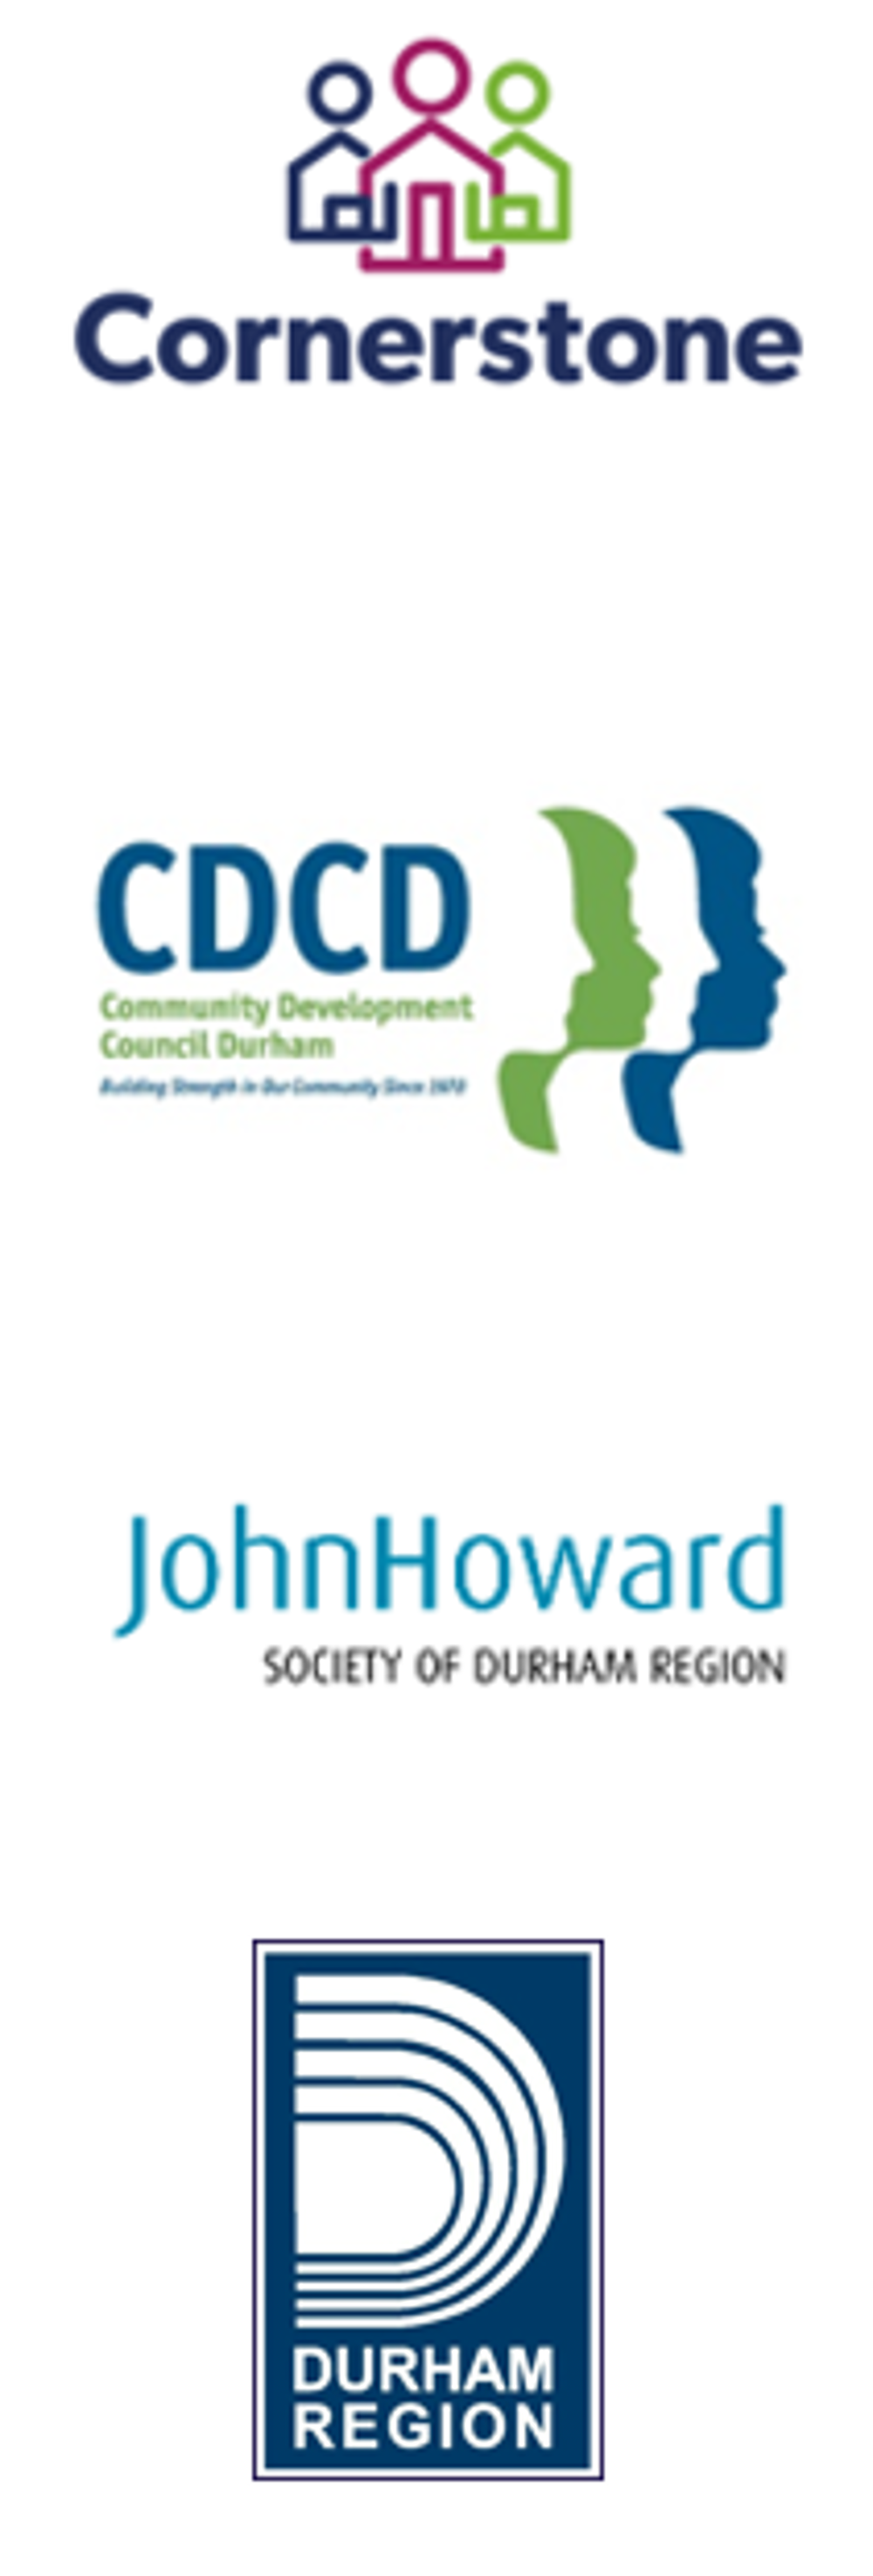 Cornerstone, Community Development Council Durham, John Howard Society of Durham Region and Region of Durham Social Services logo